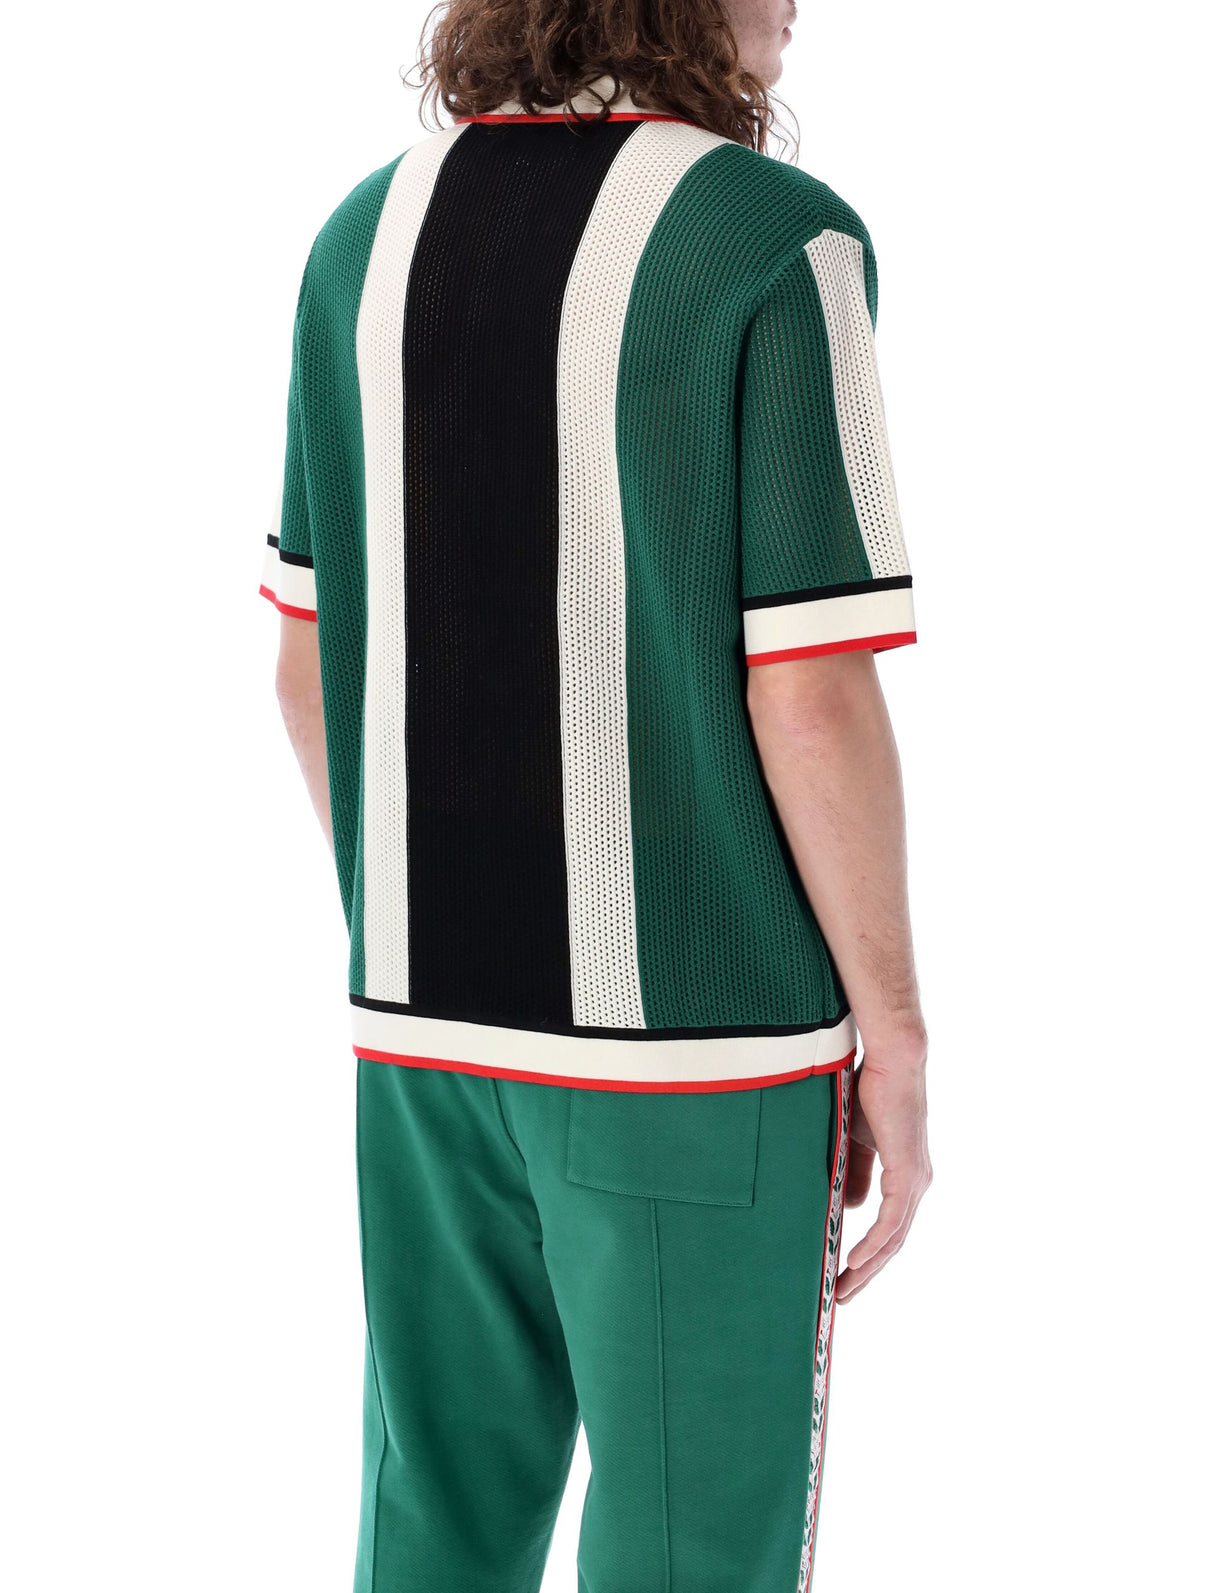 CASABLANCA Striped Mesh Shirt - Men's Green/White Vertical Striped Trafotared Button Up